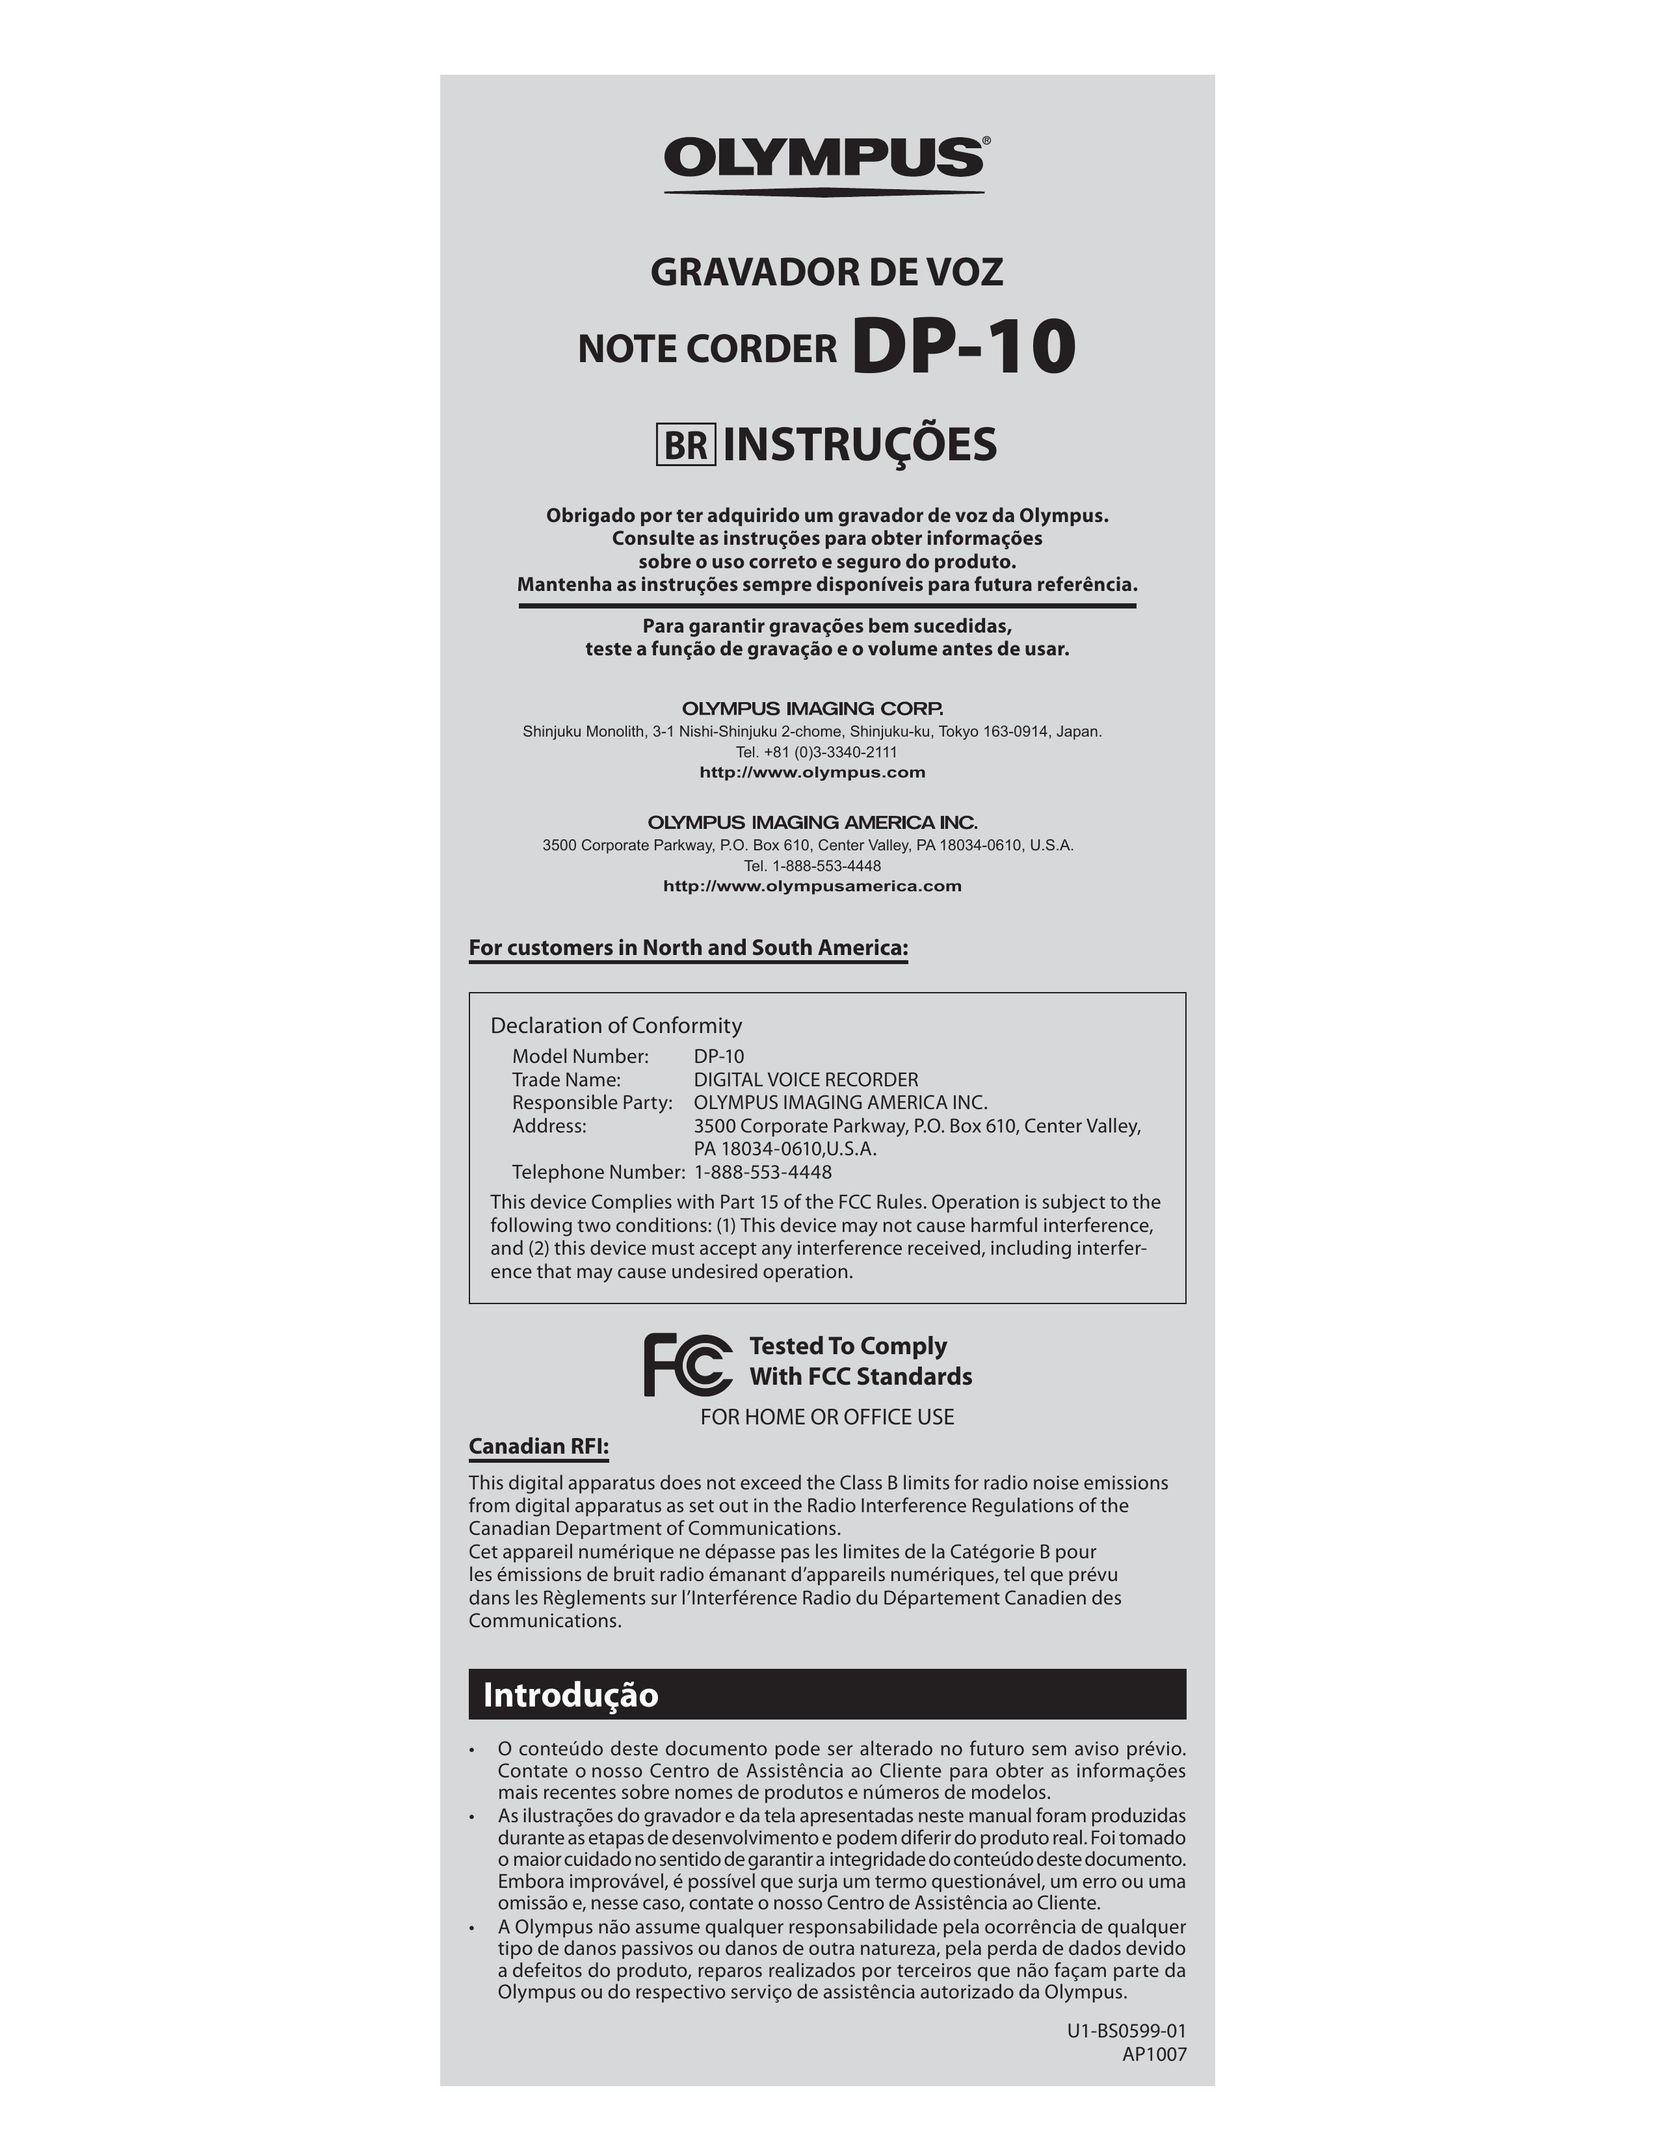 Olympus DP-10 Microcassette Recorder User Manual